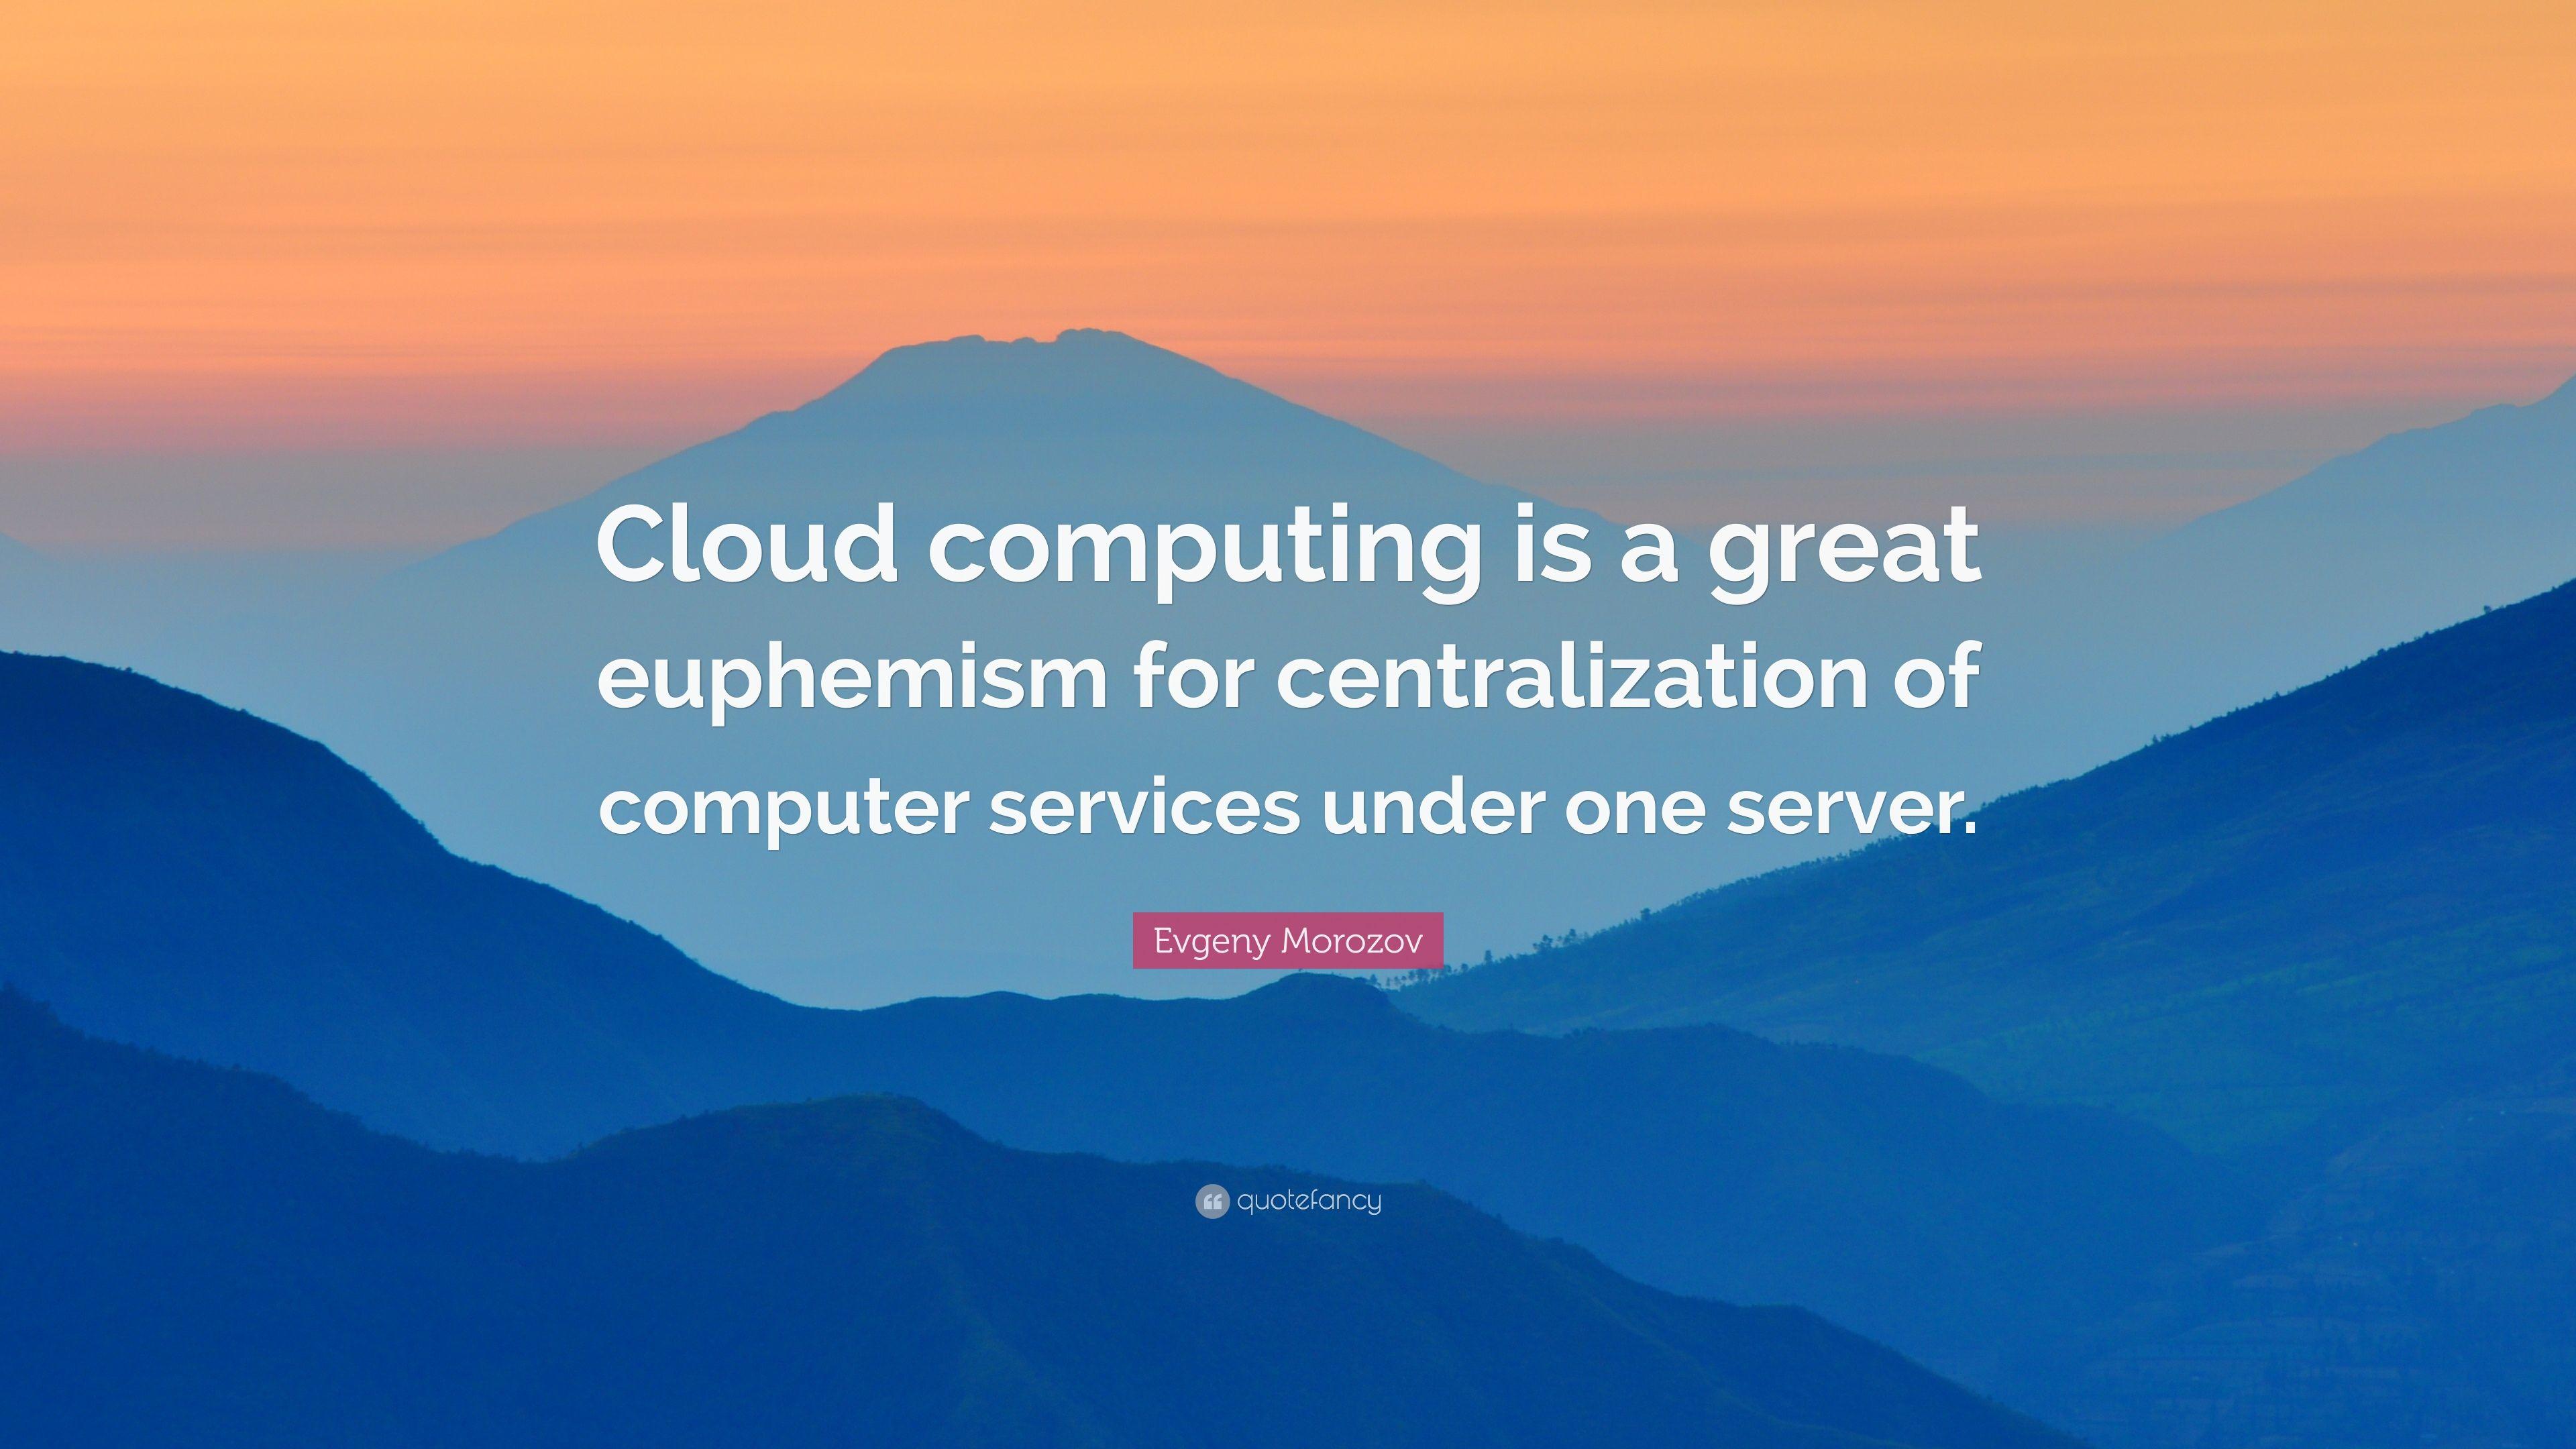 Evgeny Morozov Quote: “Cloud computing is a great euphemism